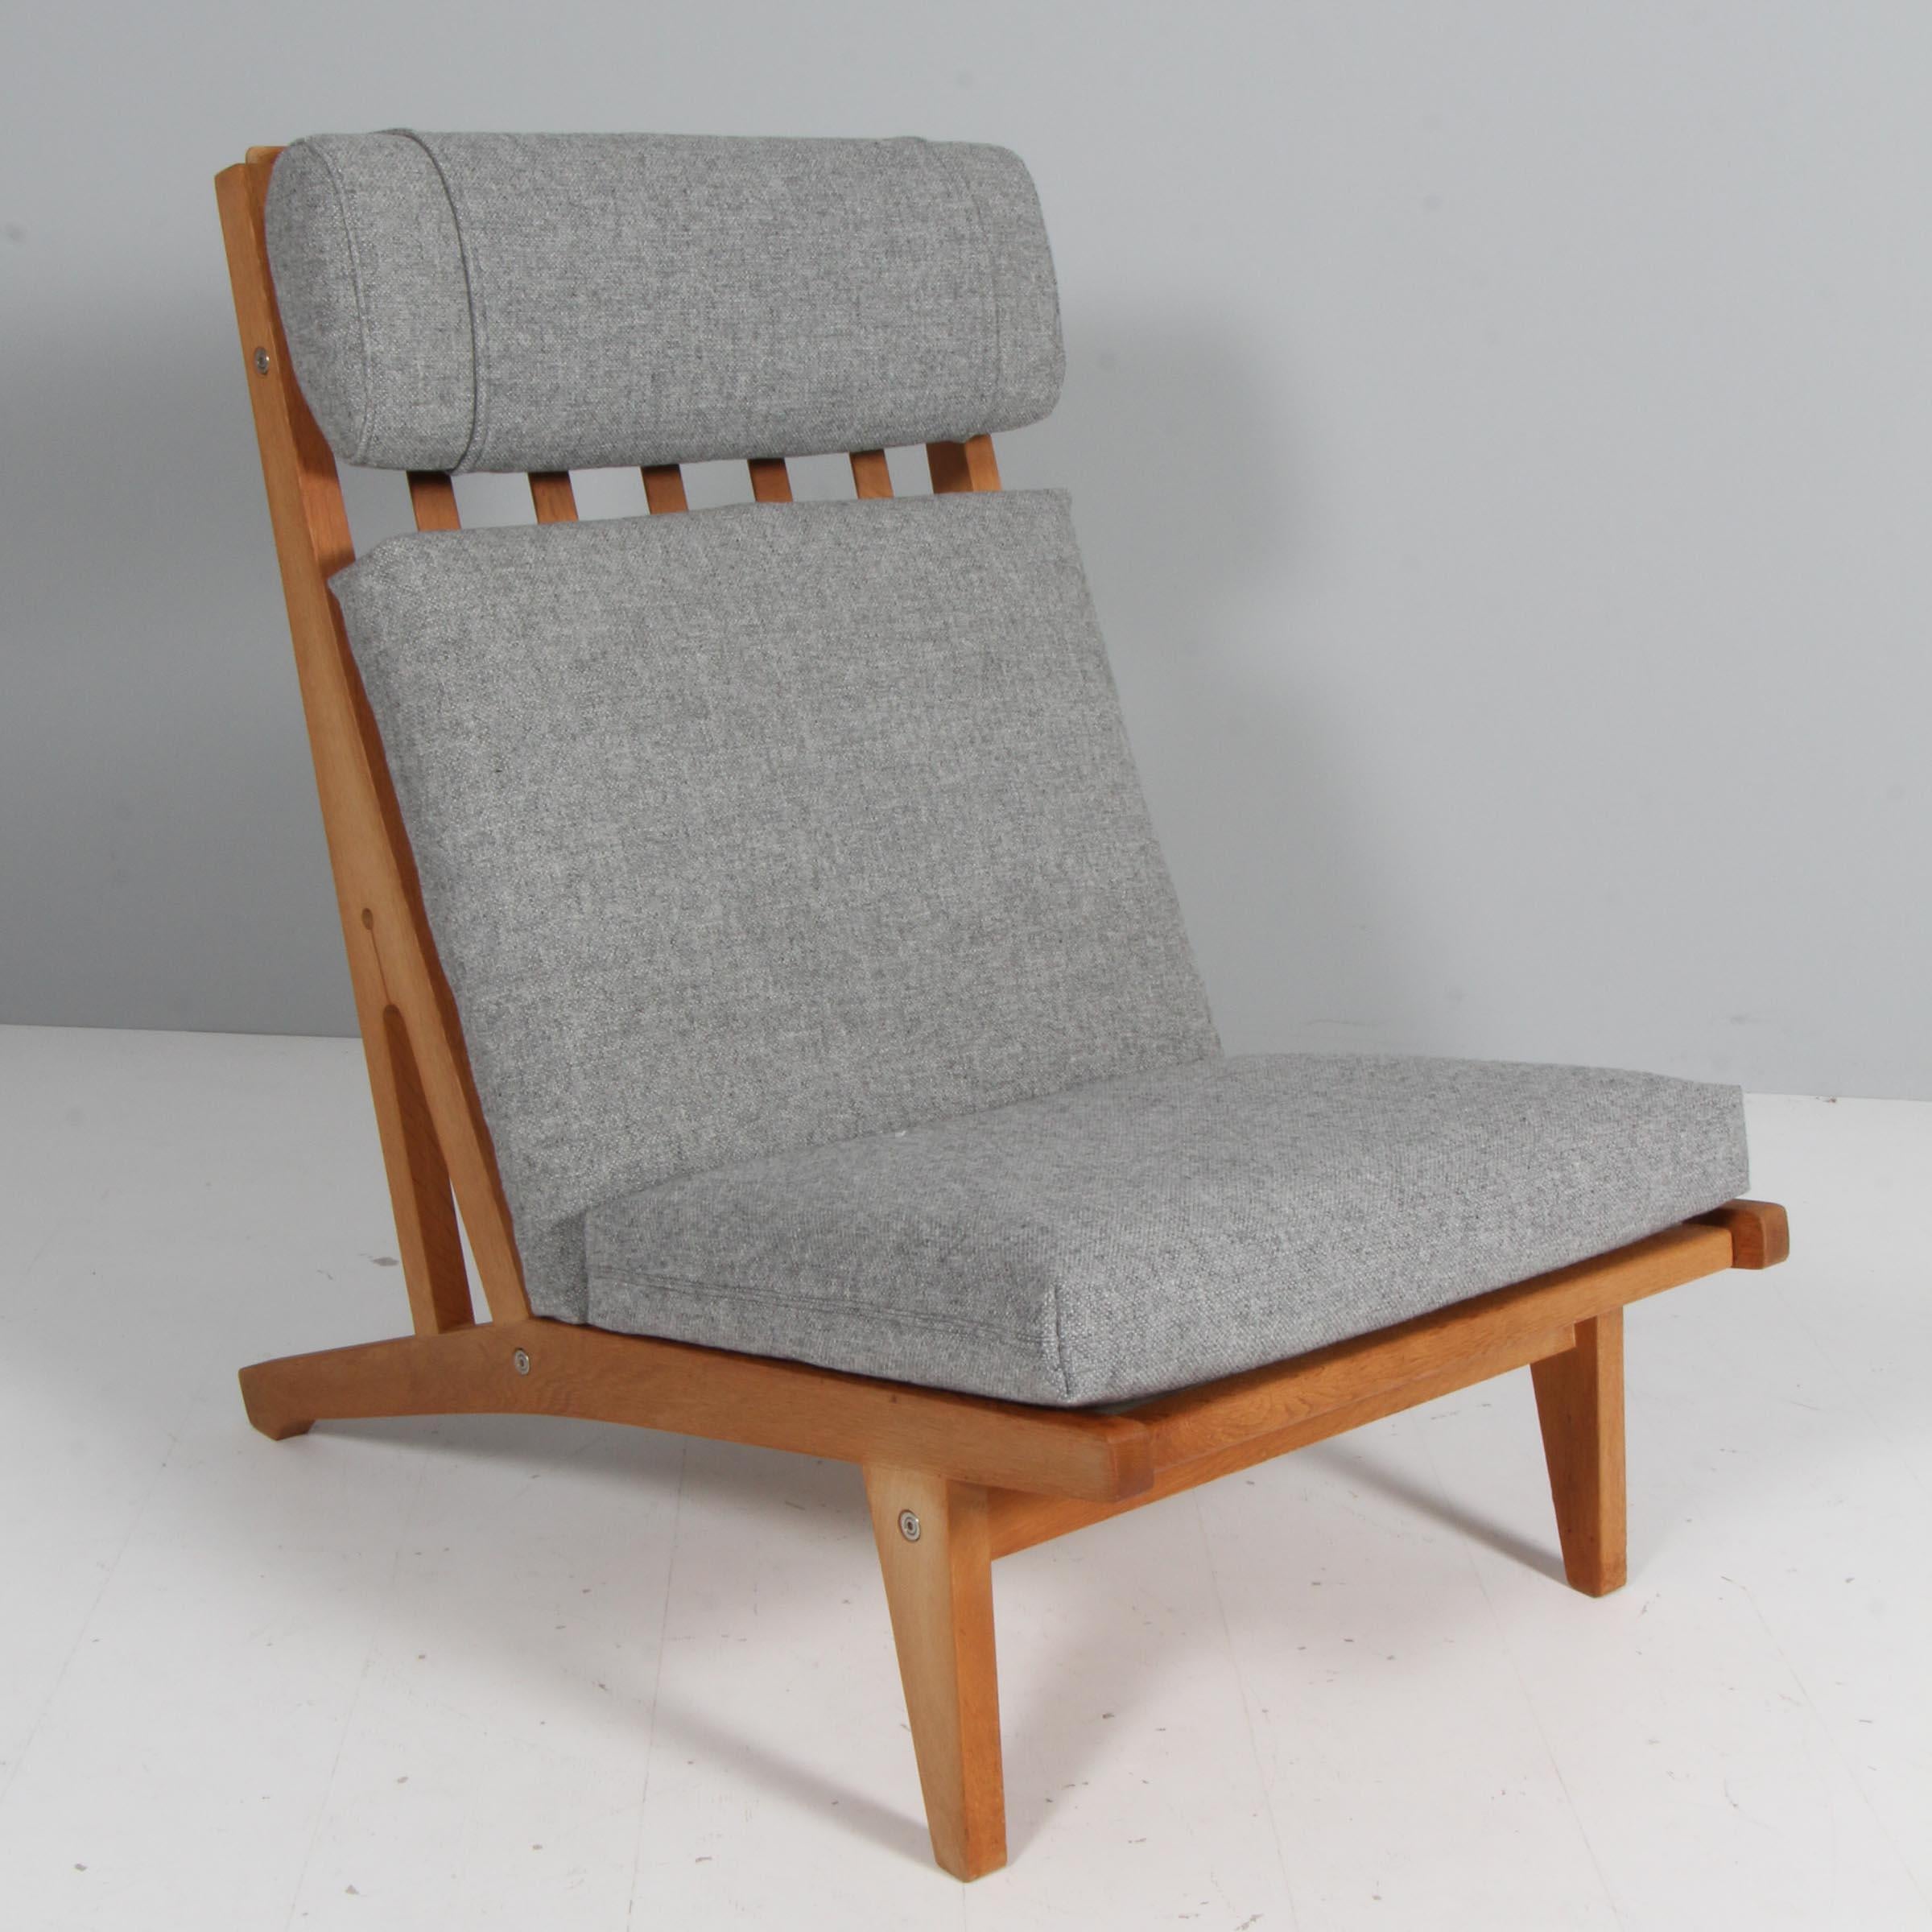 Danish Hans J. Wegner Lounge Chair with ottoman, Model GE-375